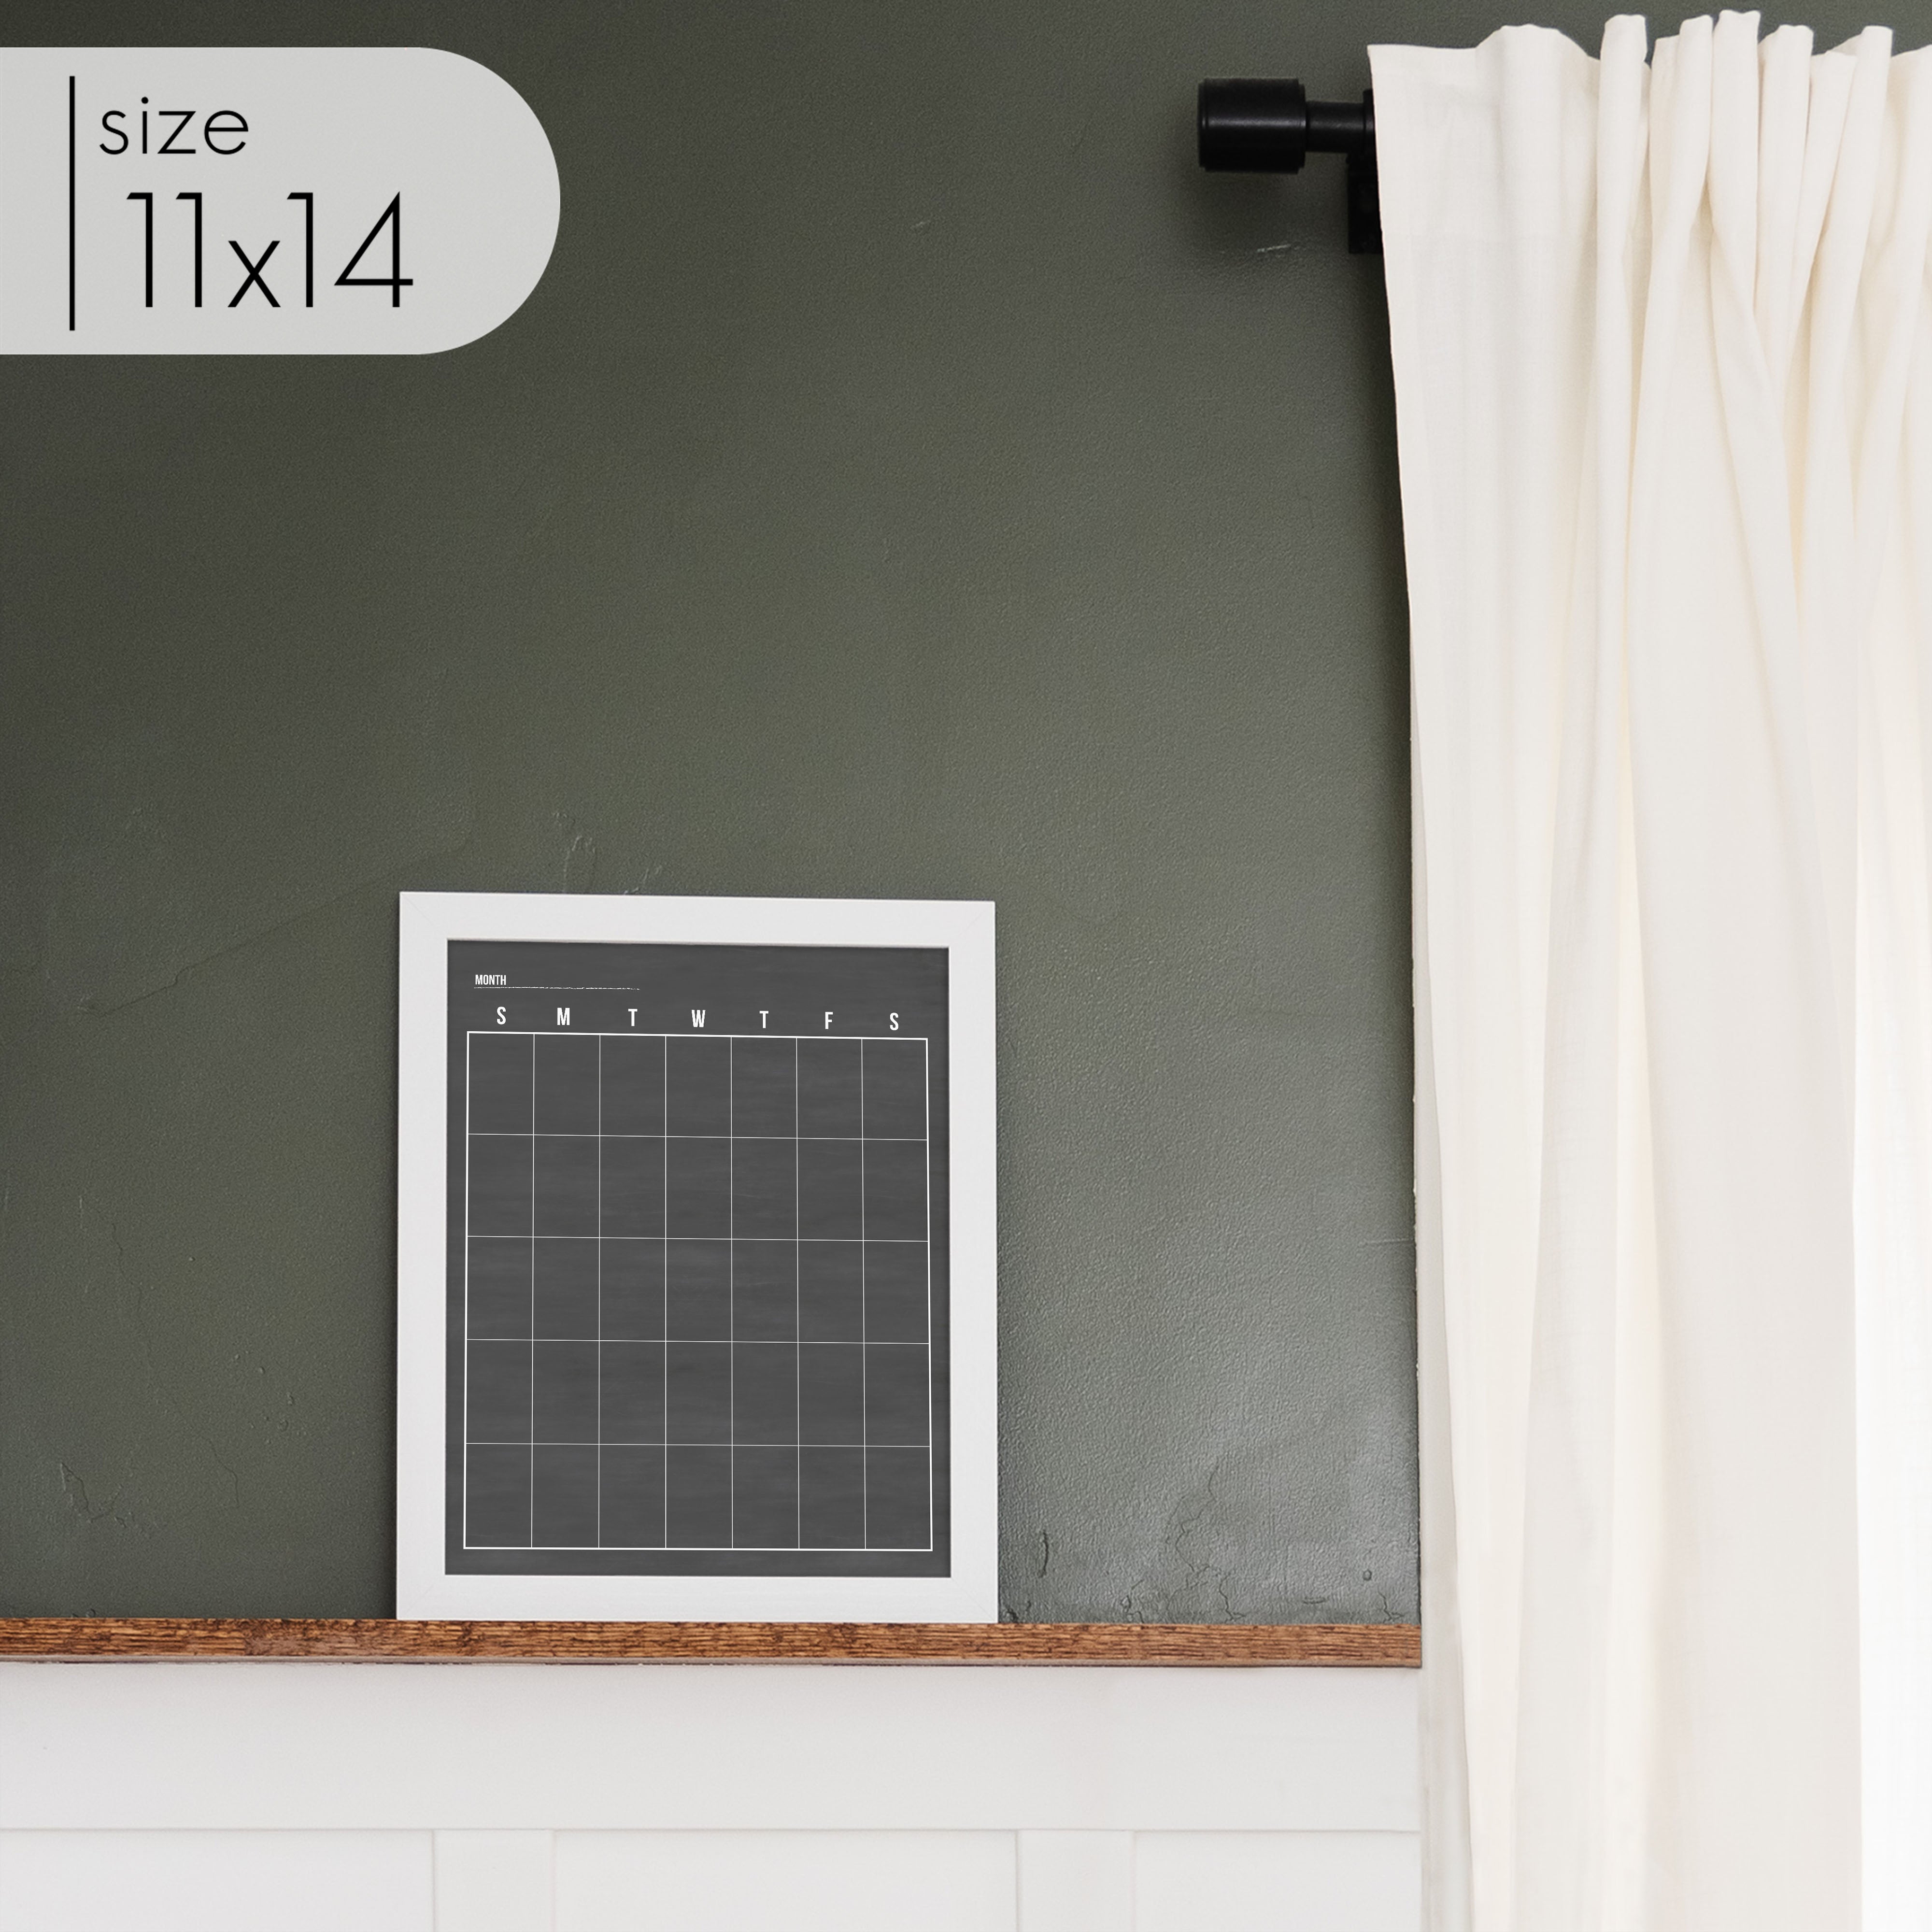 Monthly Framed Chalkboard Calendar | Vertical Dwyer